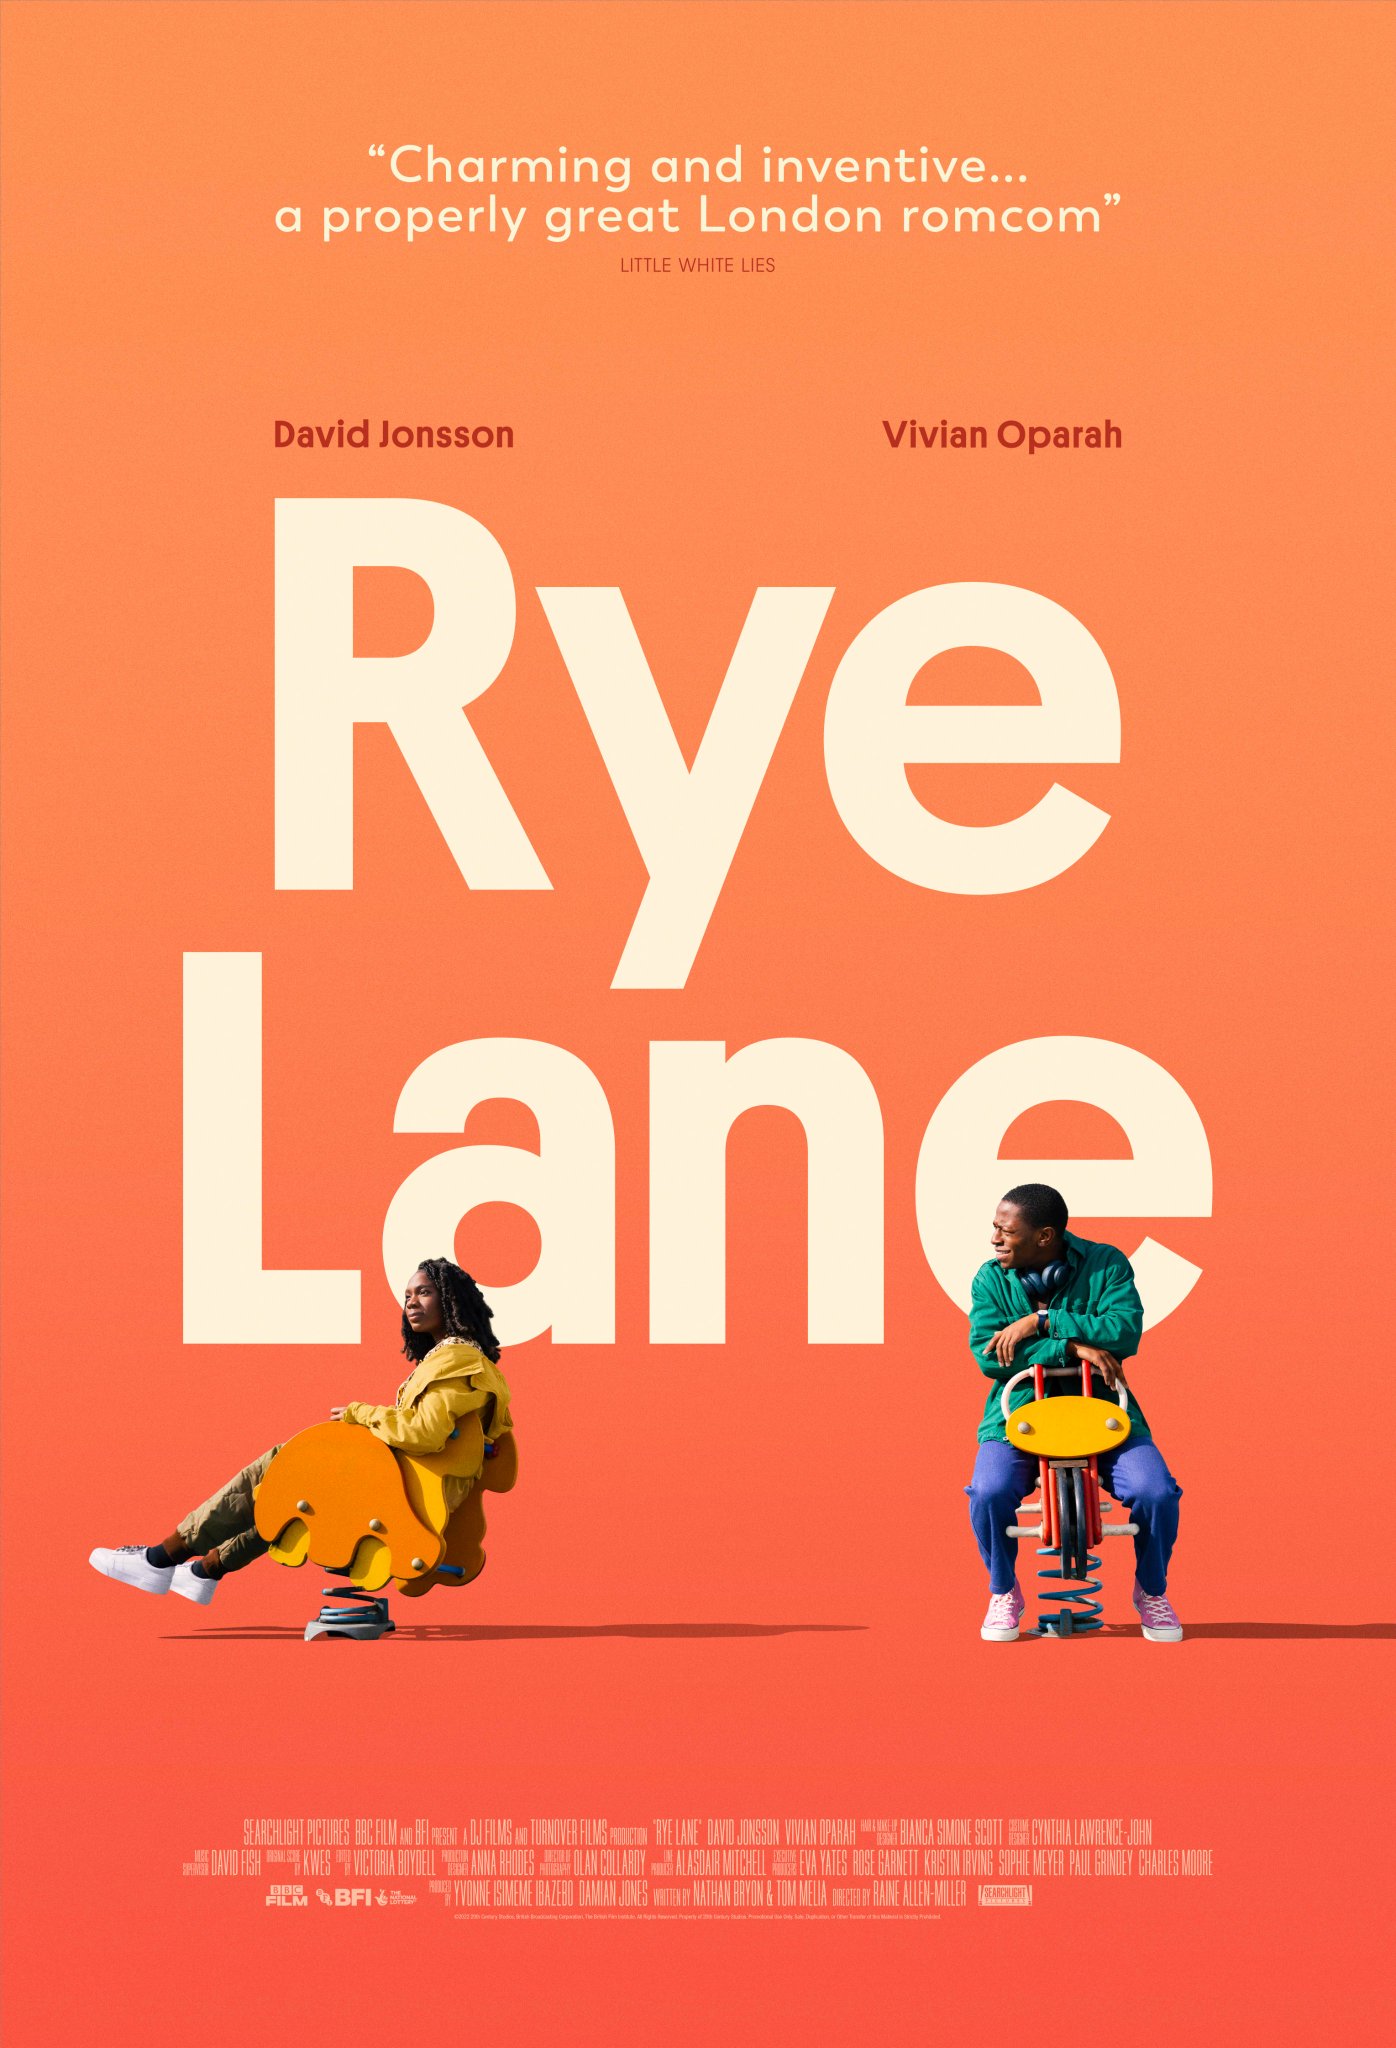 Rye Lane